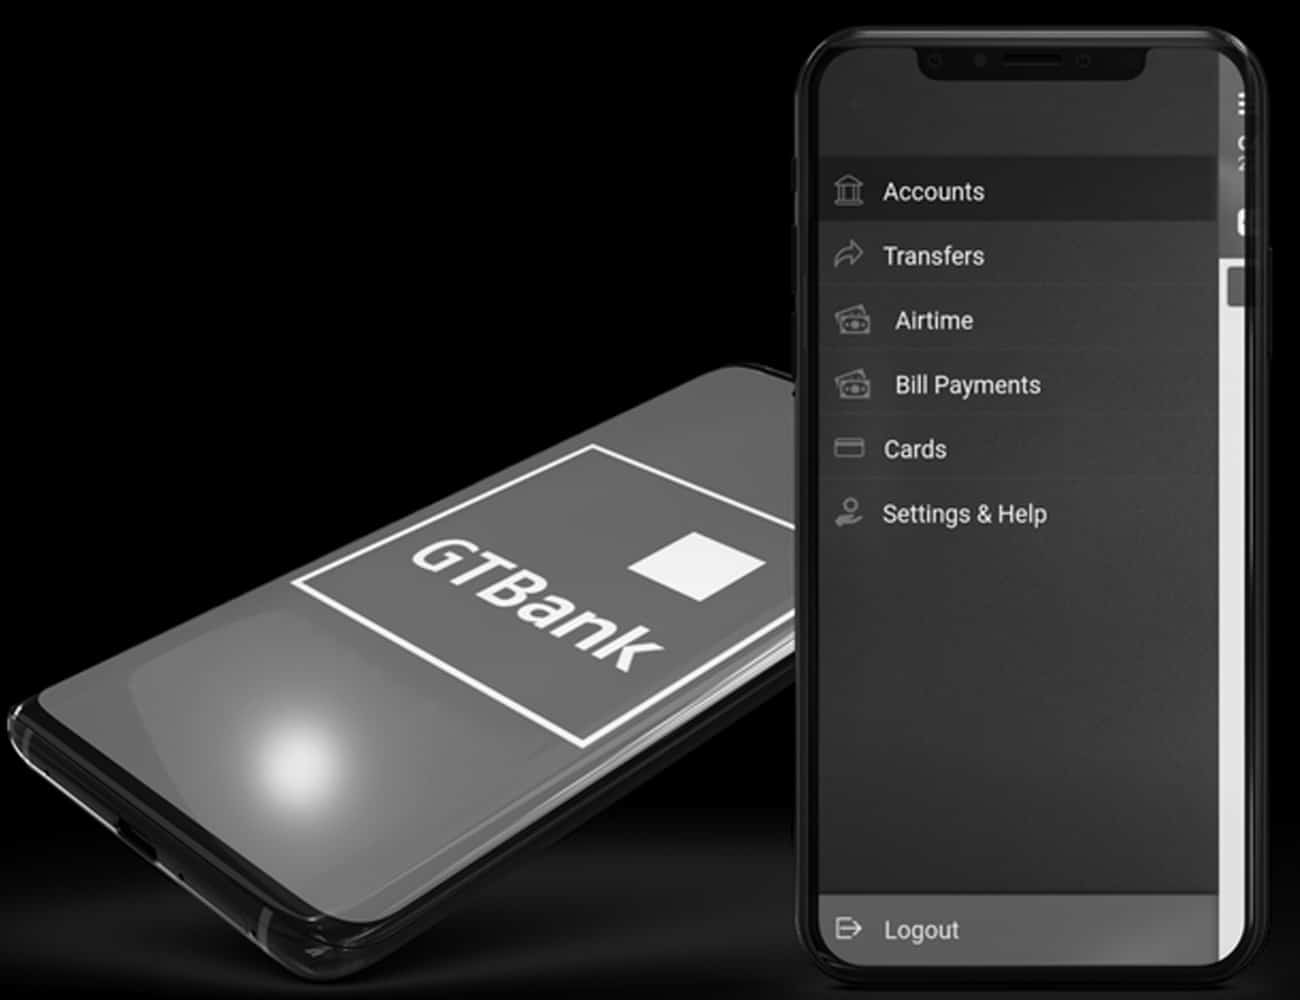 GTBank Mobile Banking App